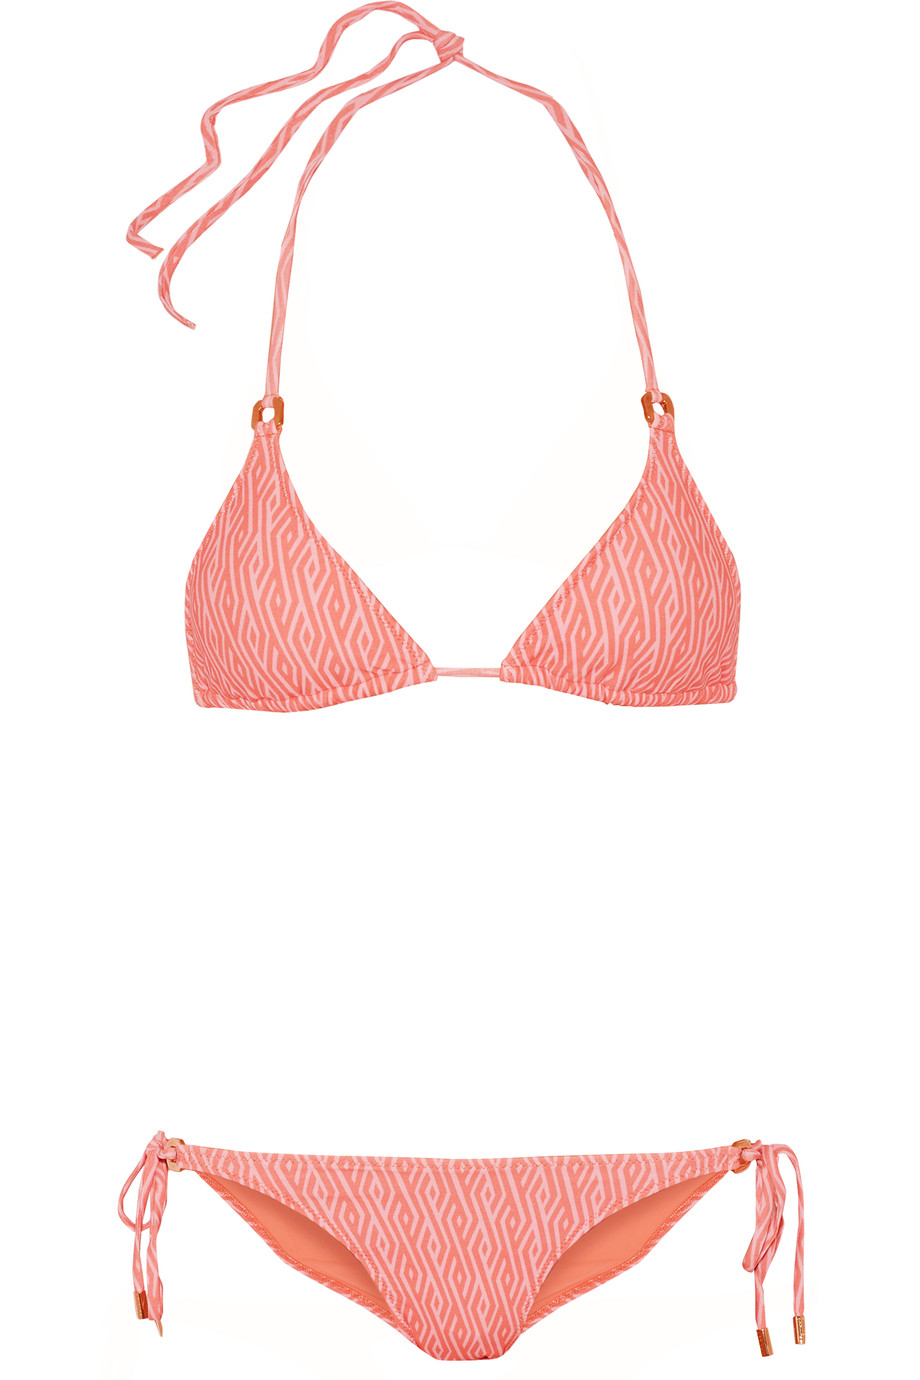 Melissa Odabash Key West Printed Triangle Bikini | ModeSens